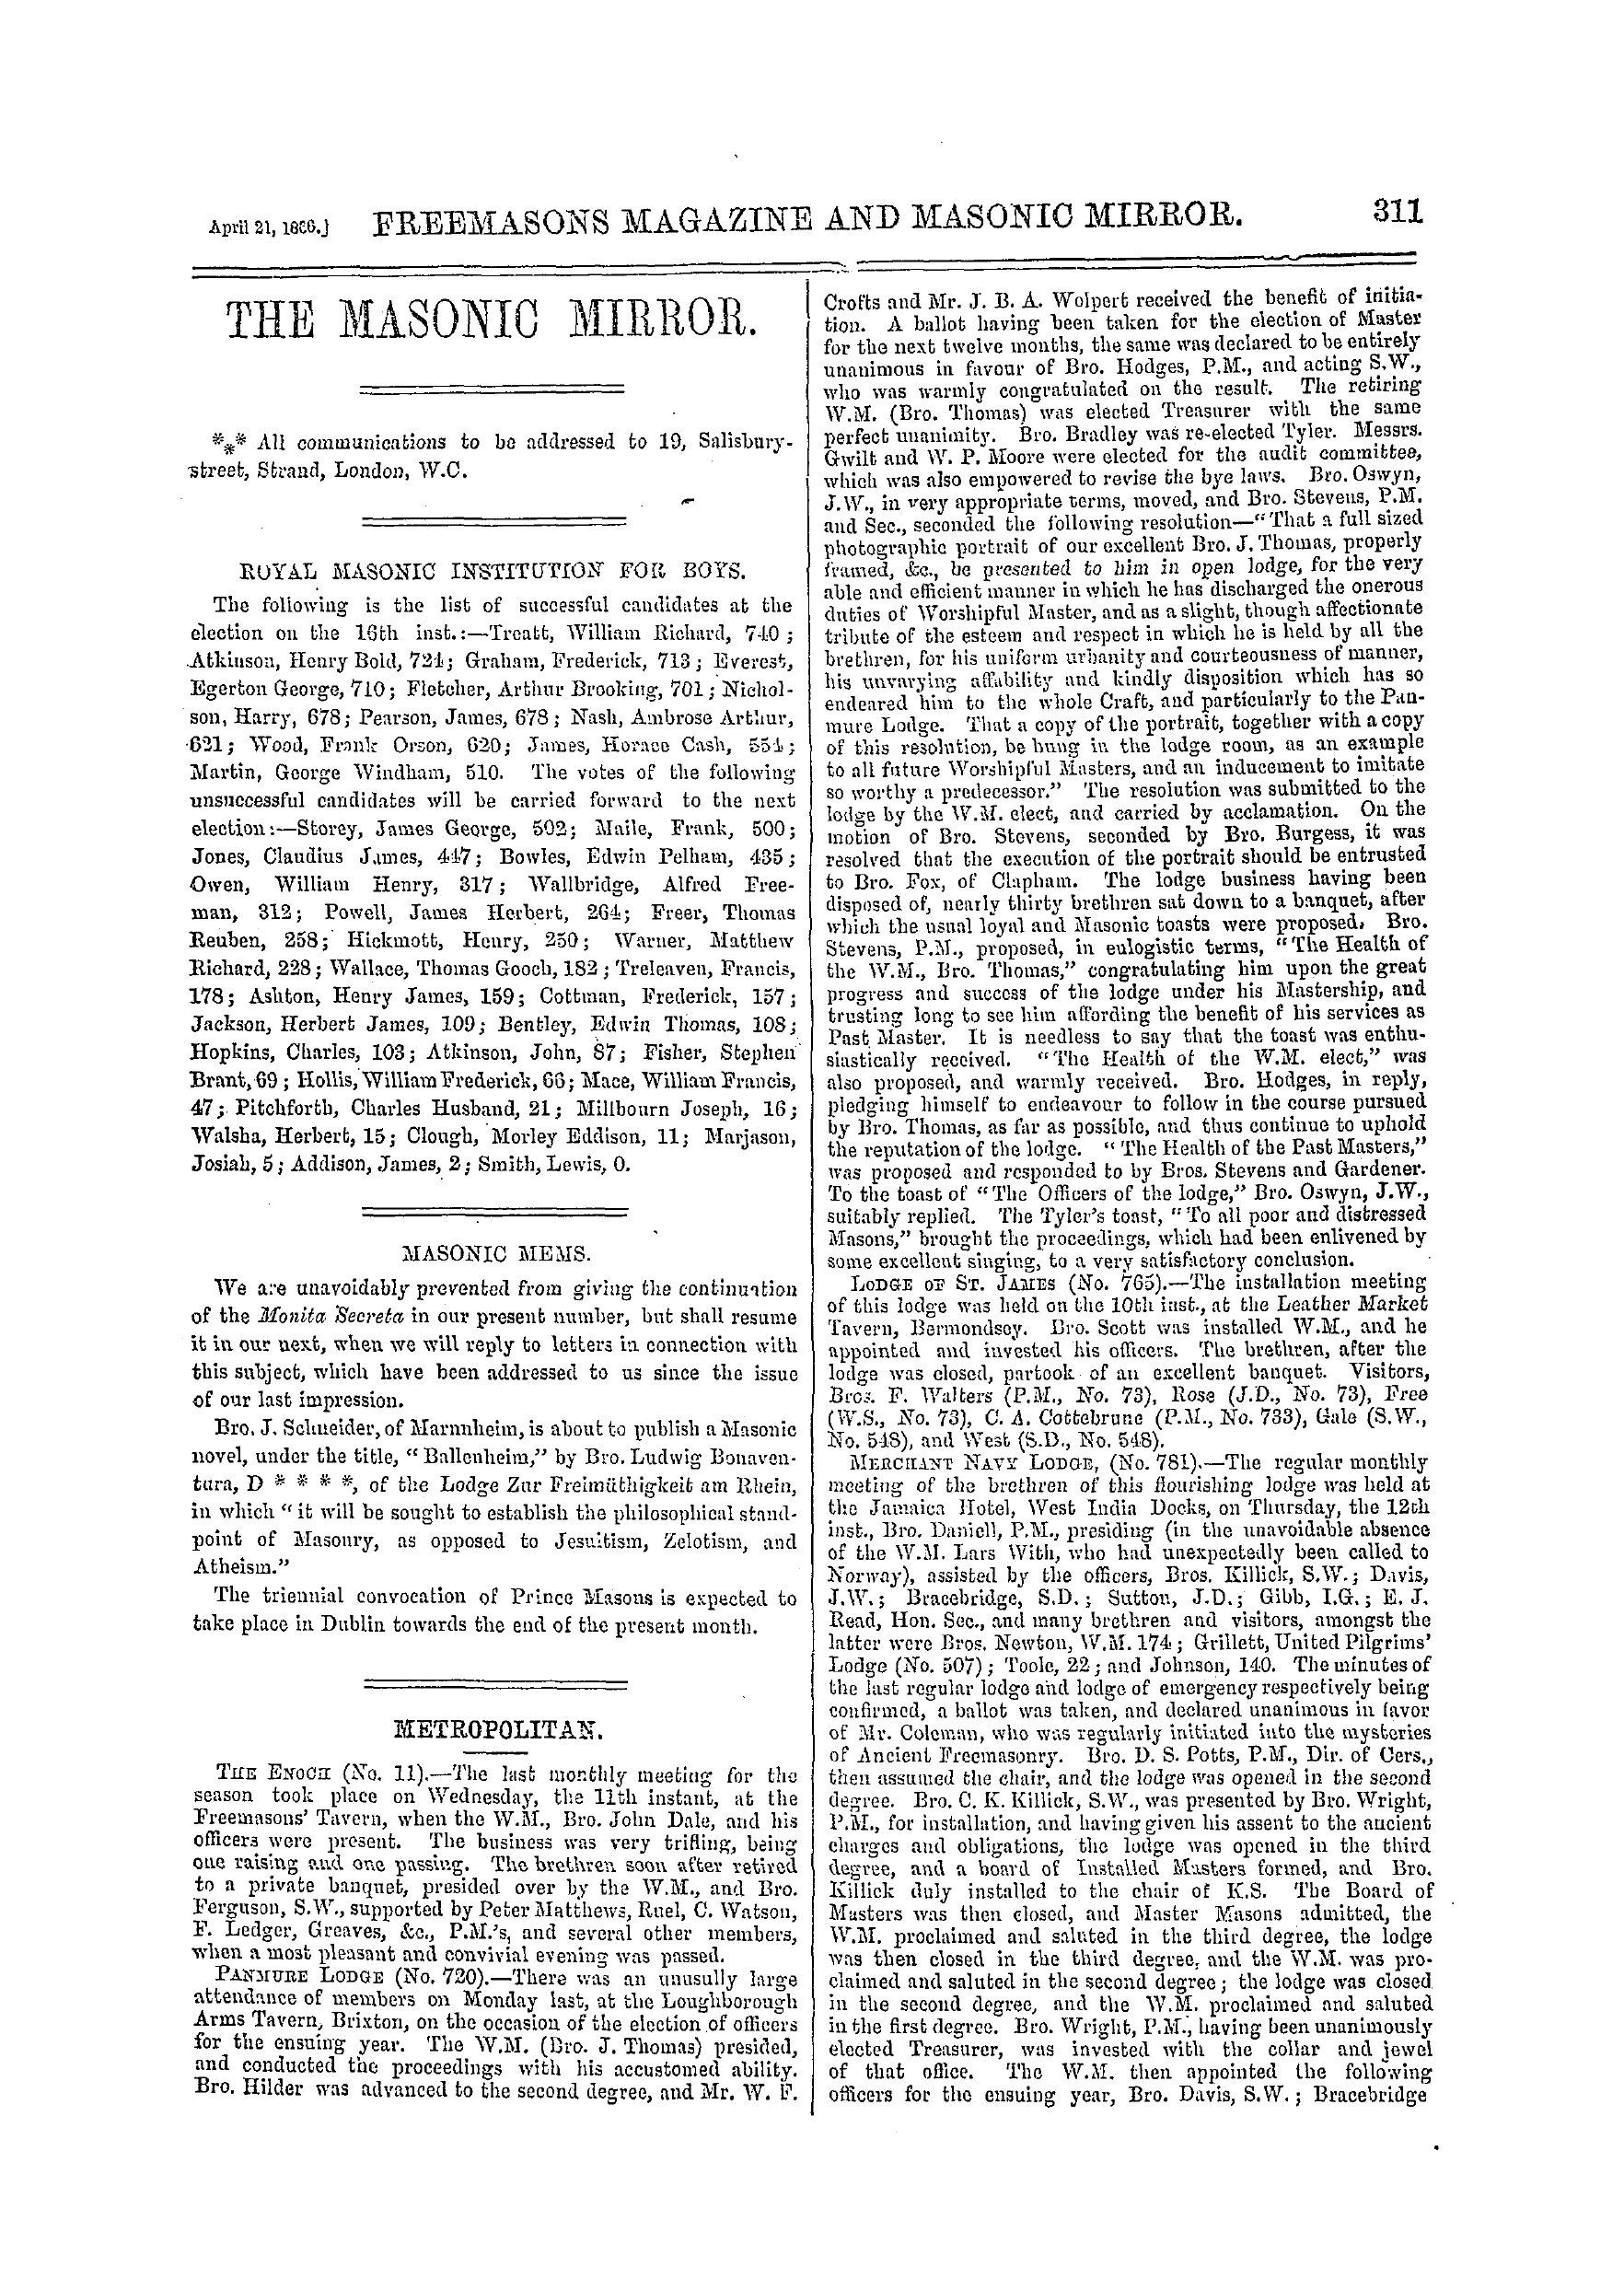 The Freemasons' Monthly Magazine: 1866-04-21 - Metropolitan.